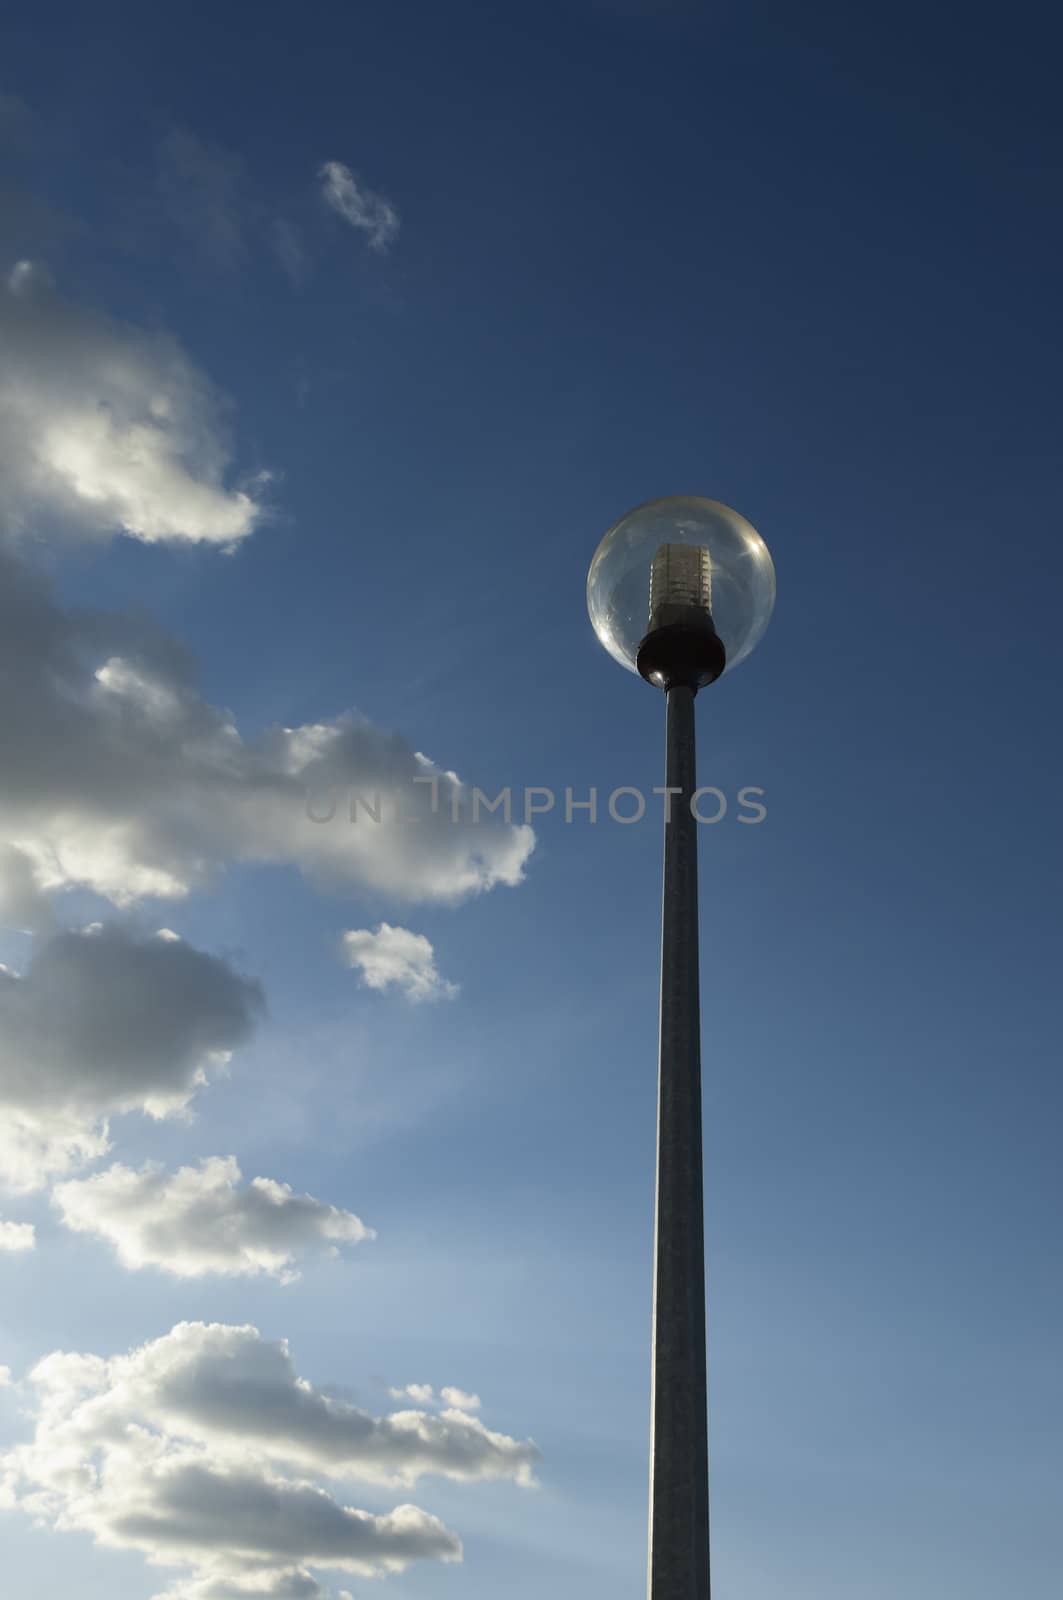 Modern spherical street light against a cloudy dramatic blue sky